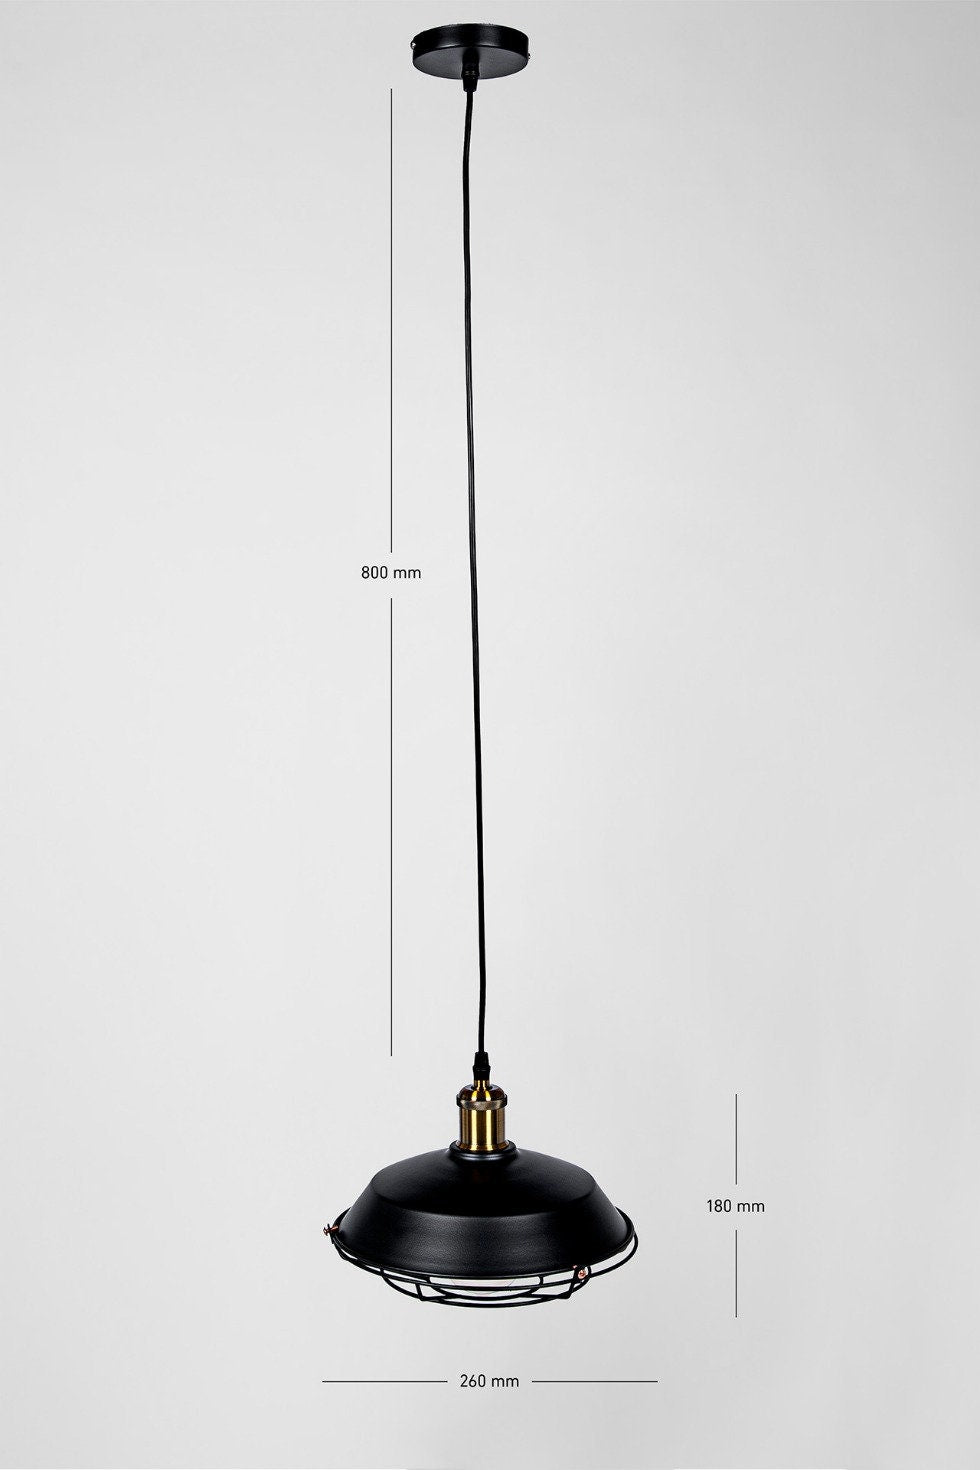 Bobby Black - Vintage industrial design metal lamp with cage